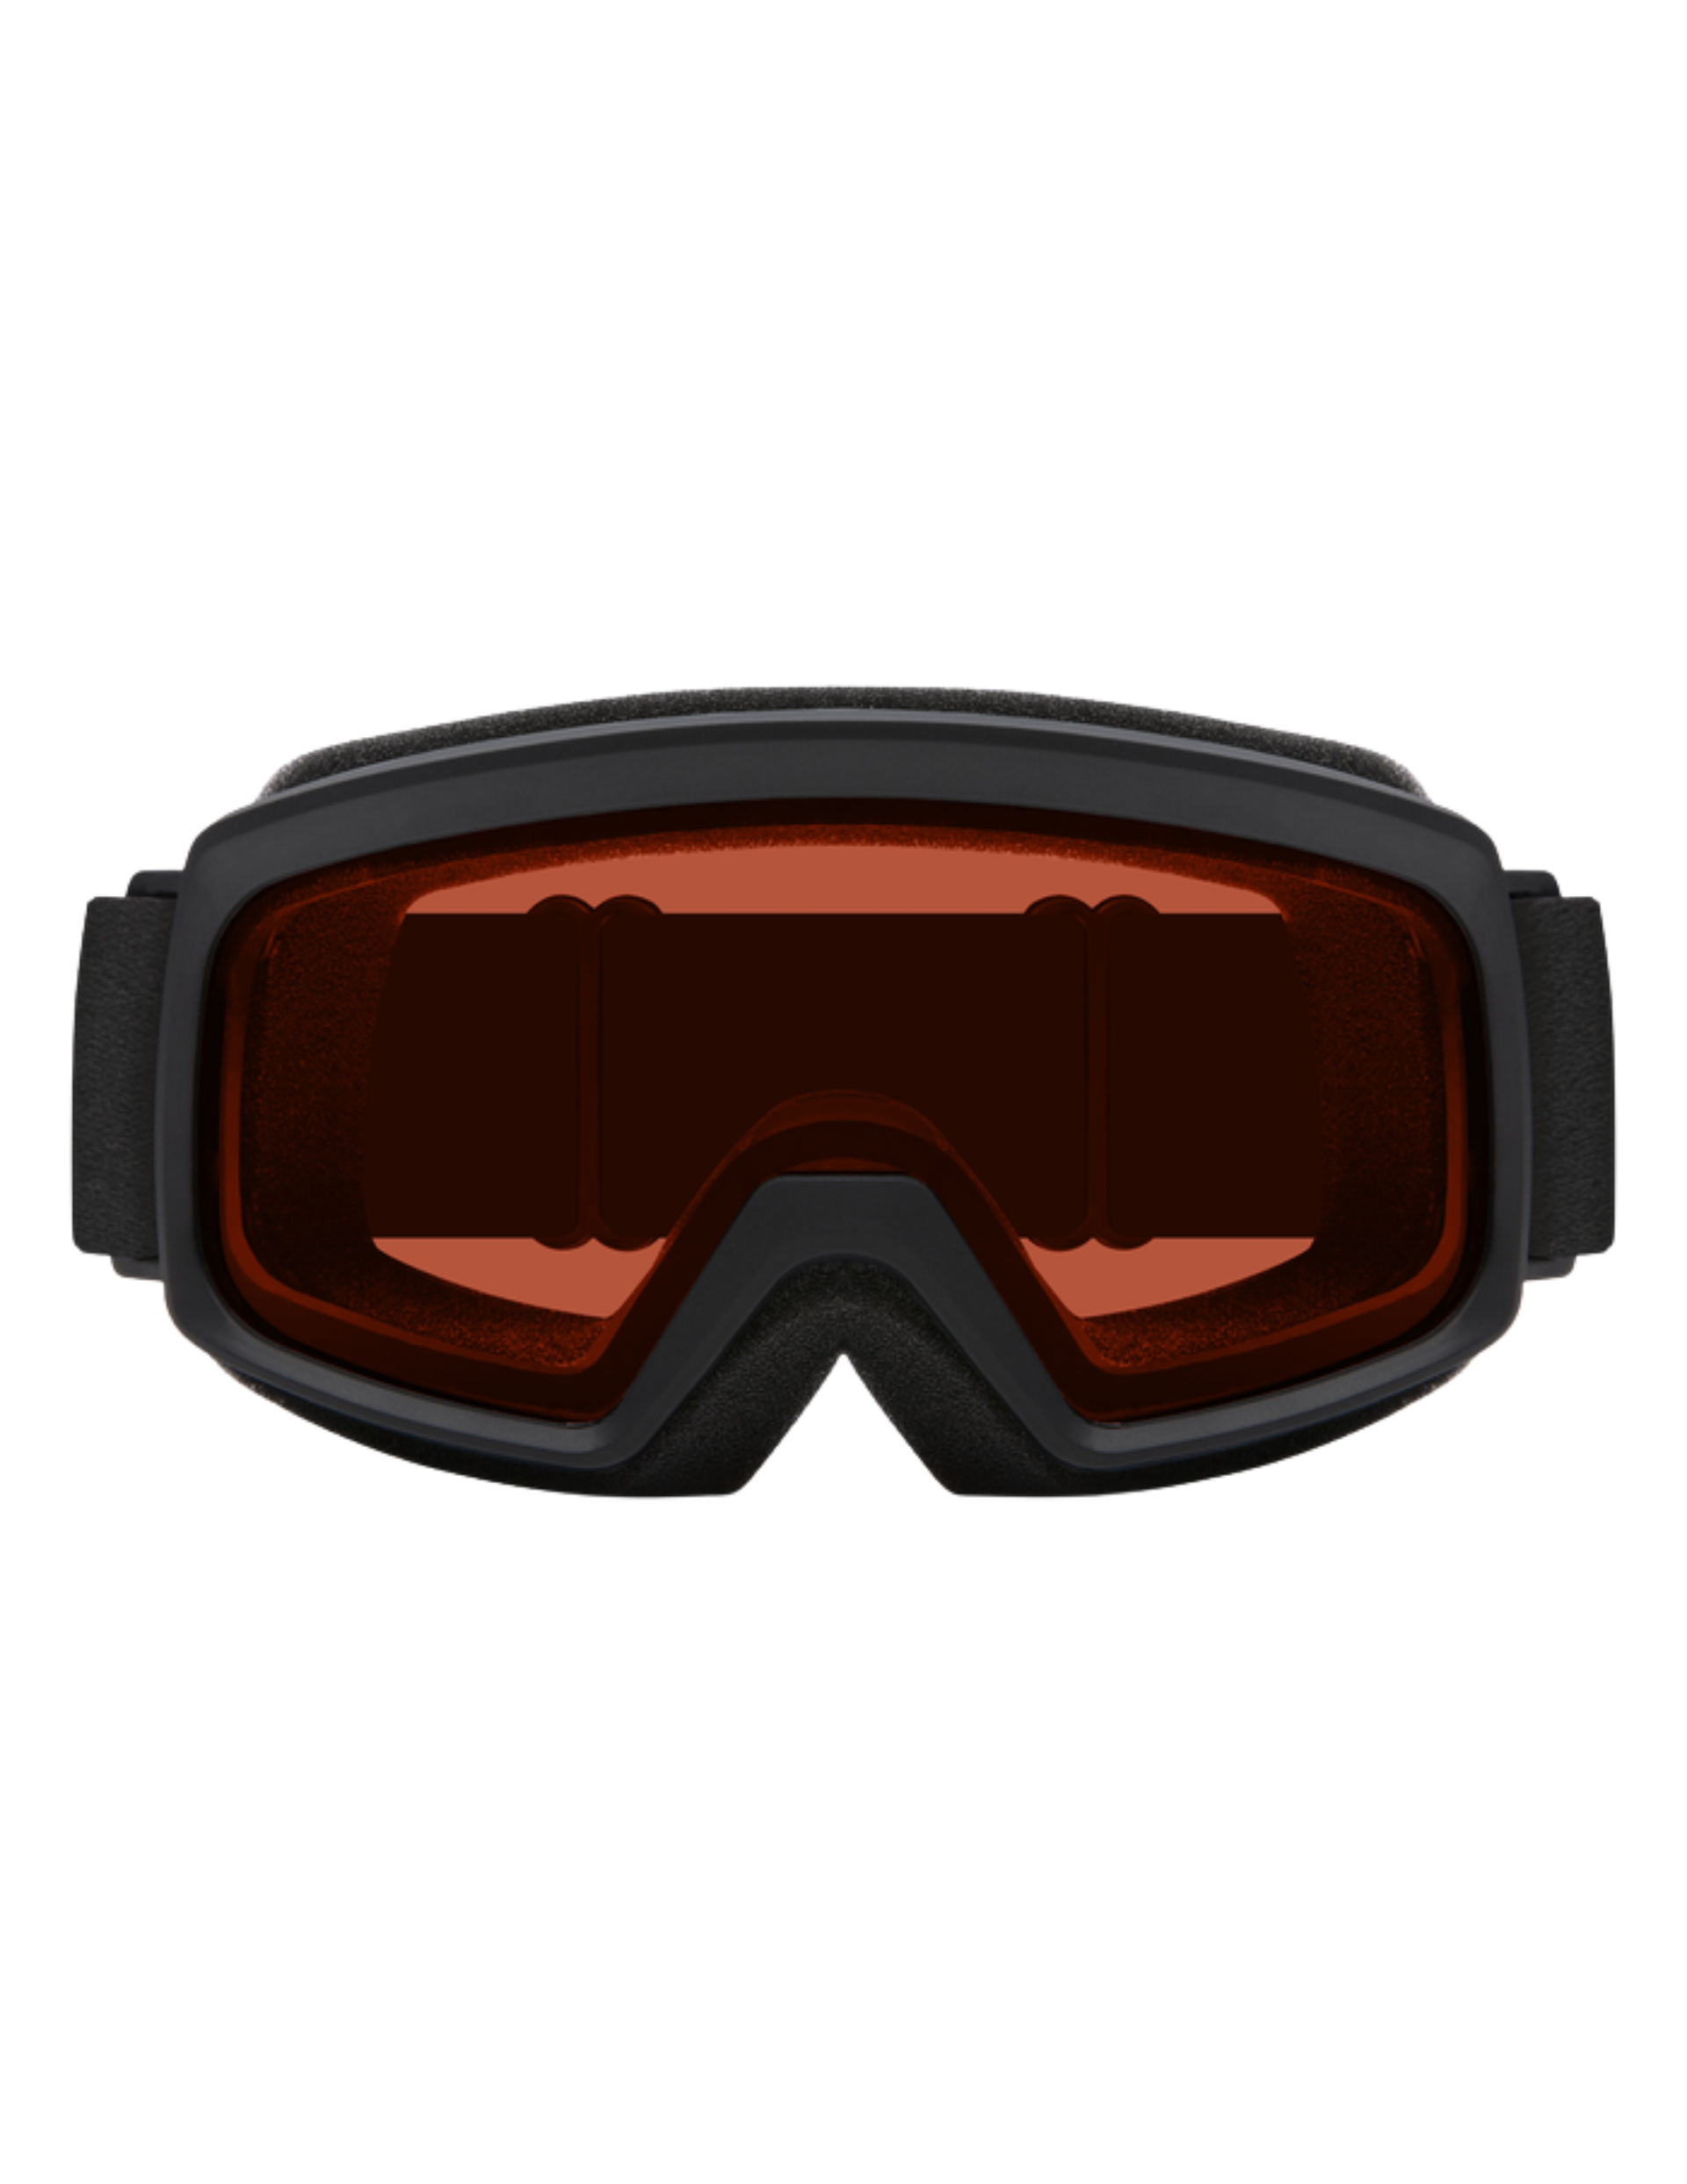 Masque de ski SMITH Rascal : écran antibuée RC36 rose/brun